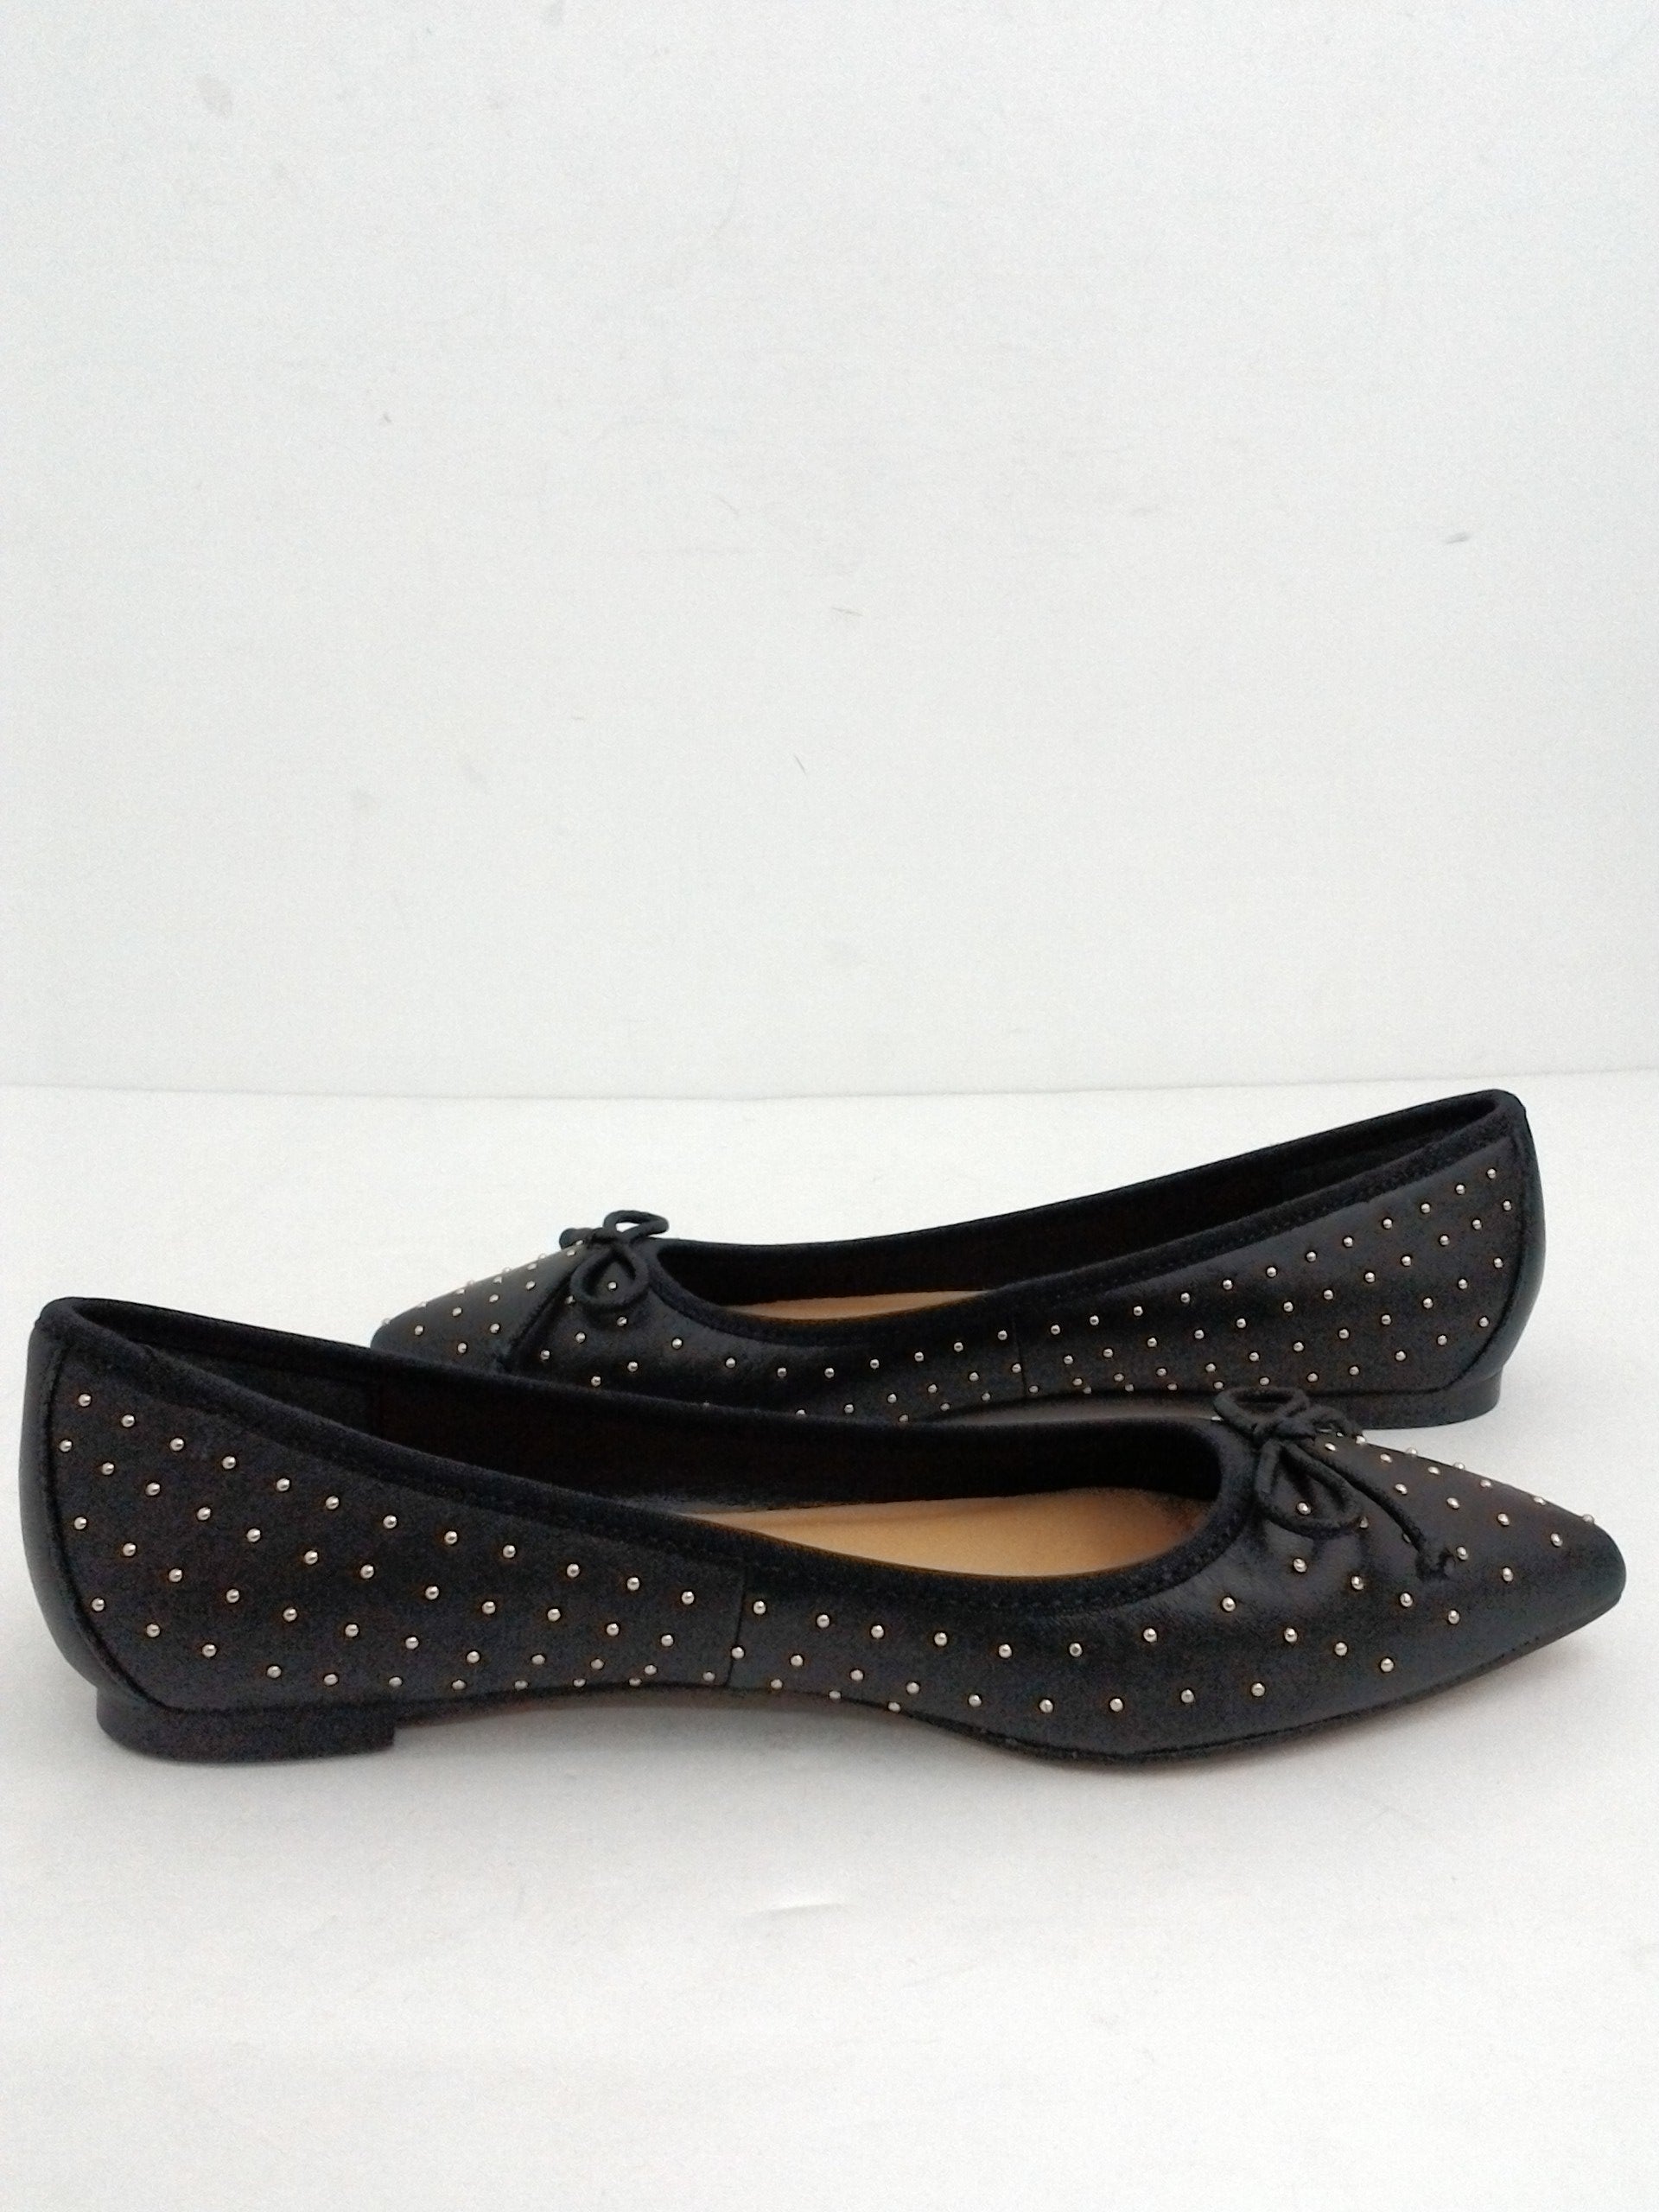 Banana Republic Women's Black Flats Size 6.5 - Prime Shoes and More